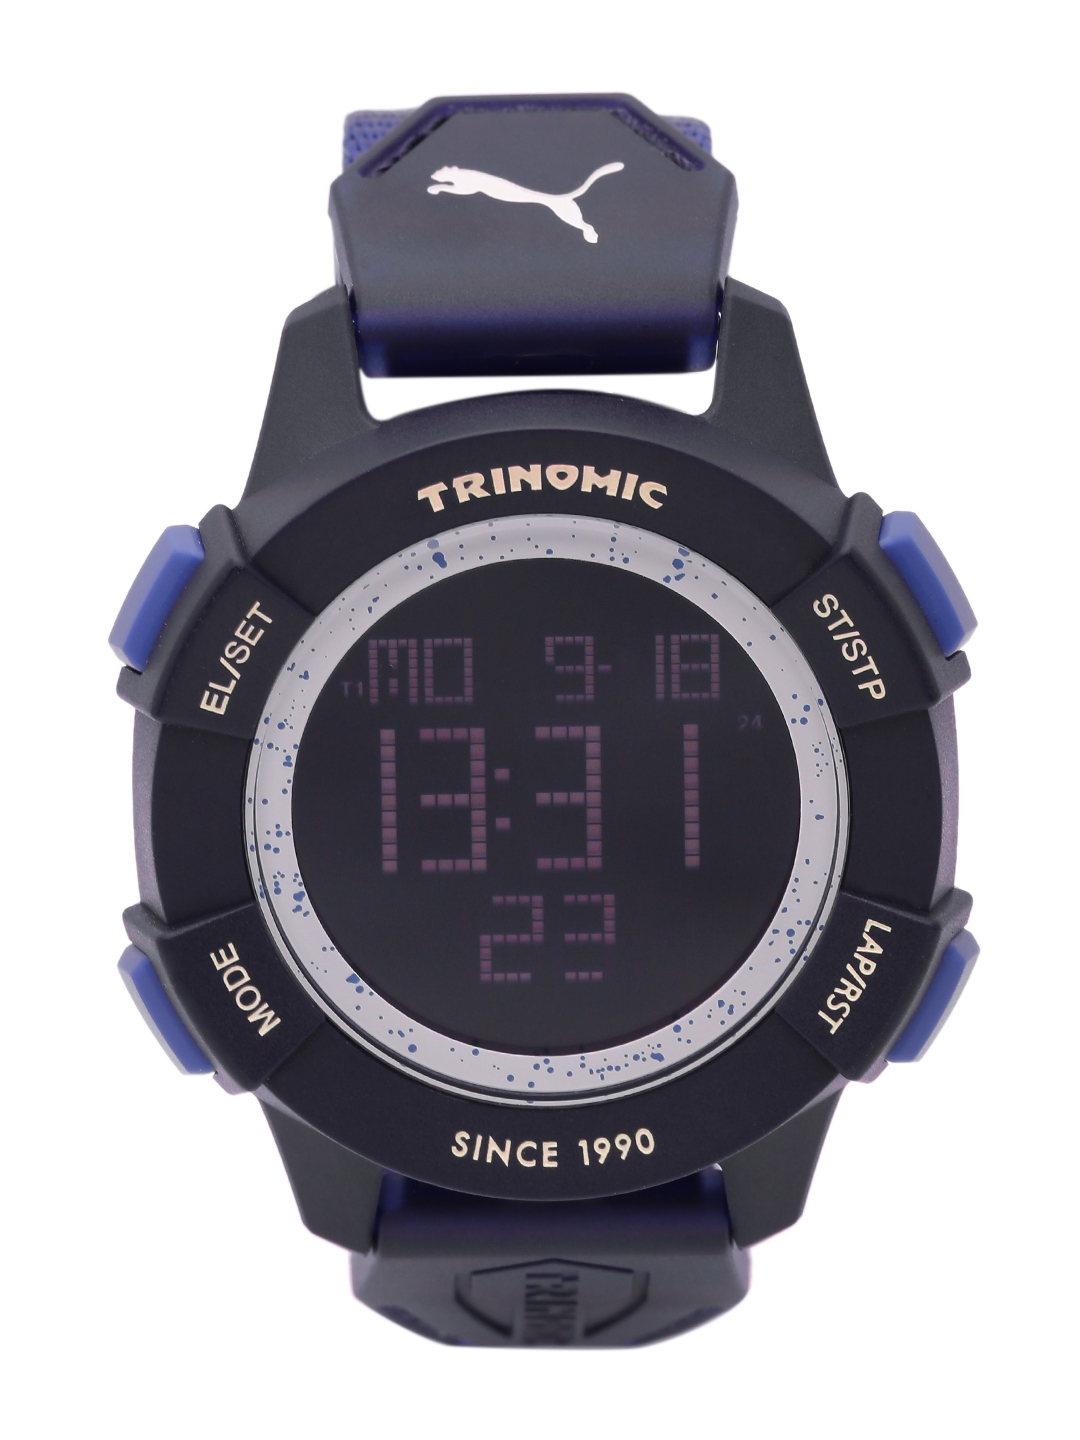 puma trinomic watch